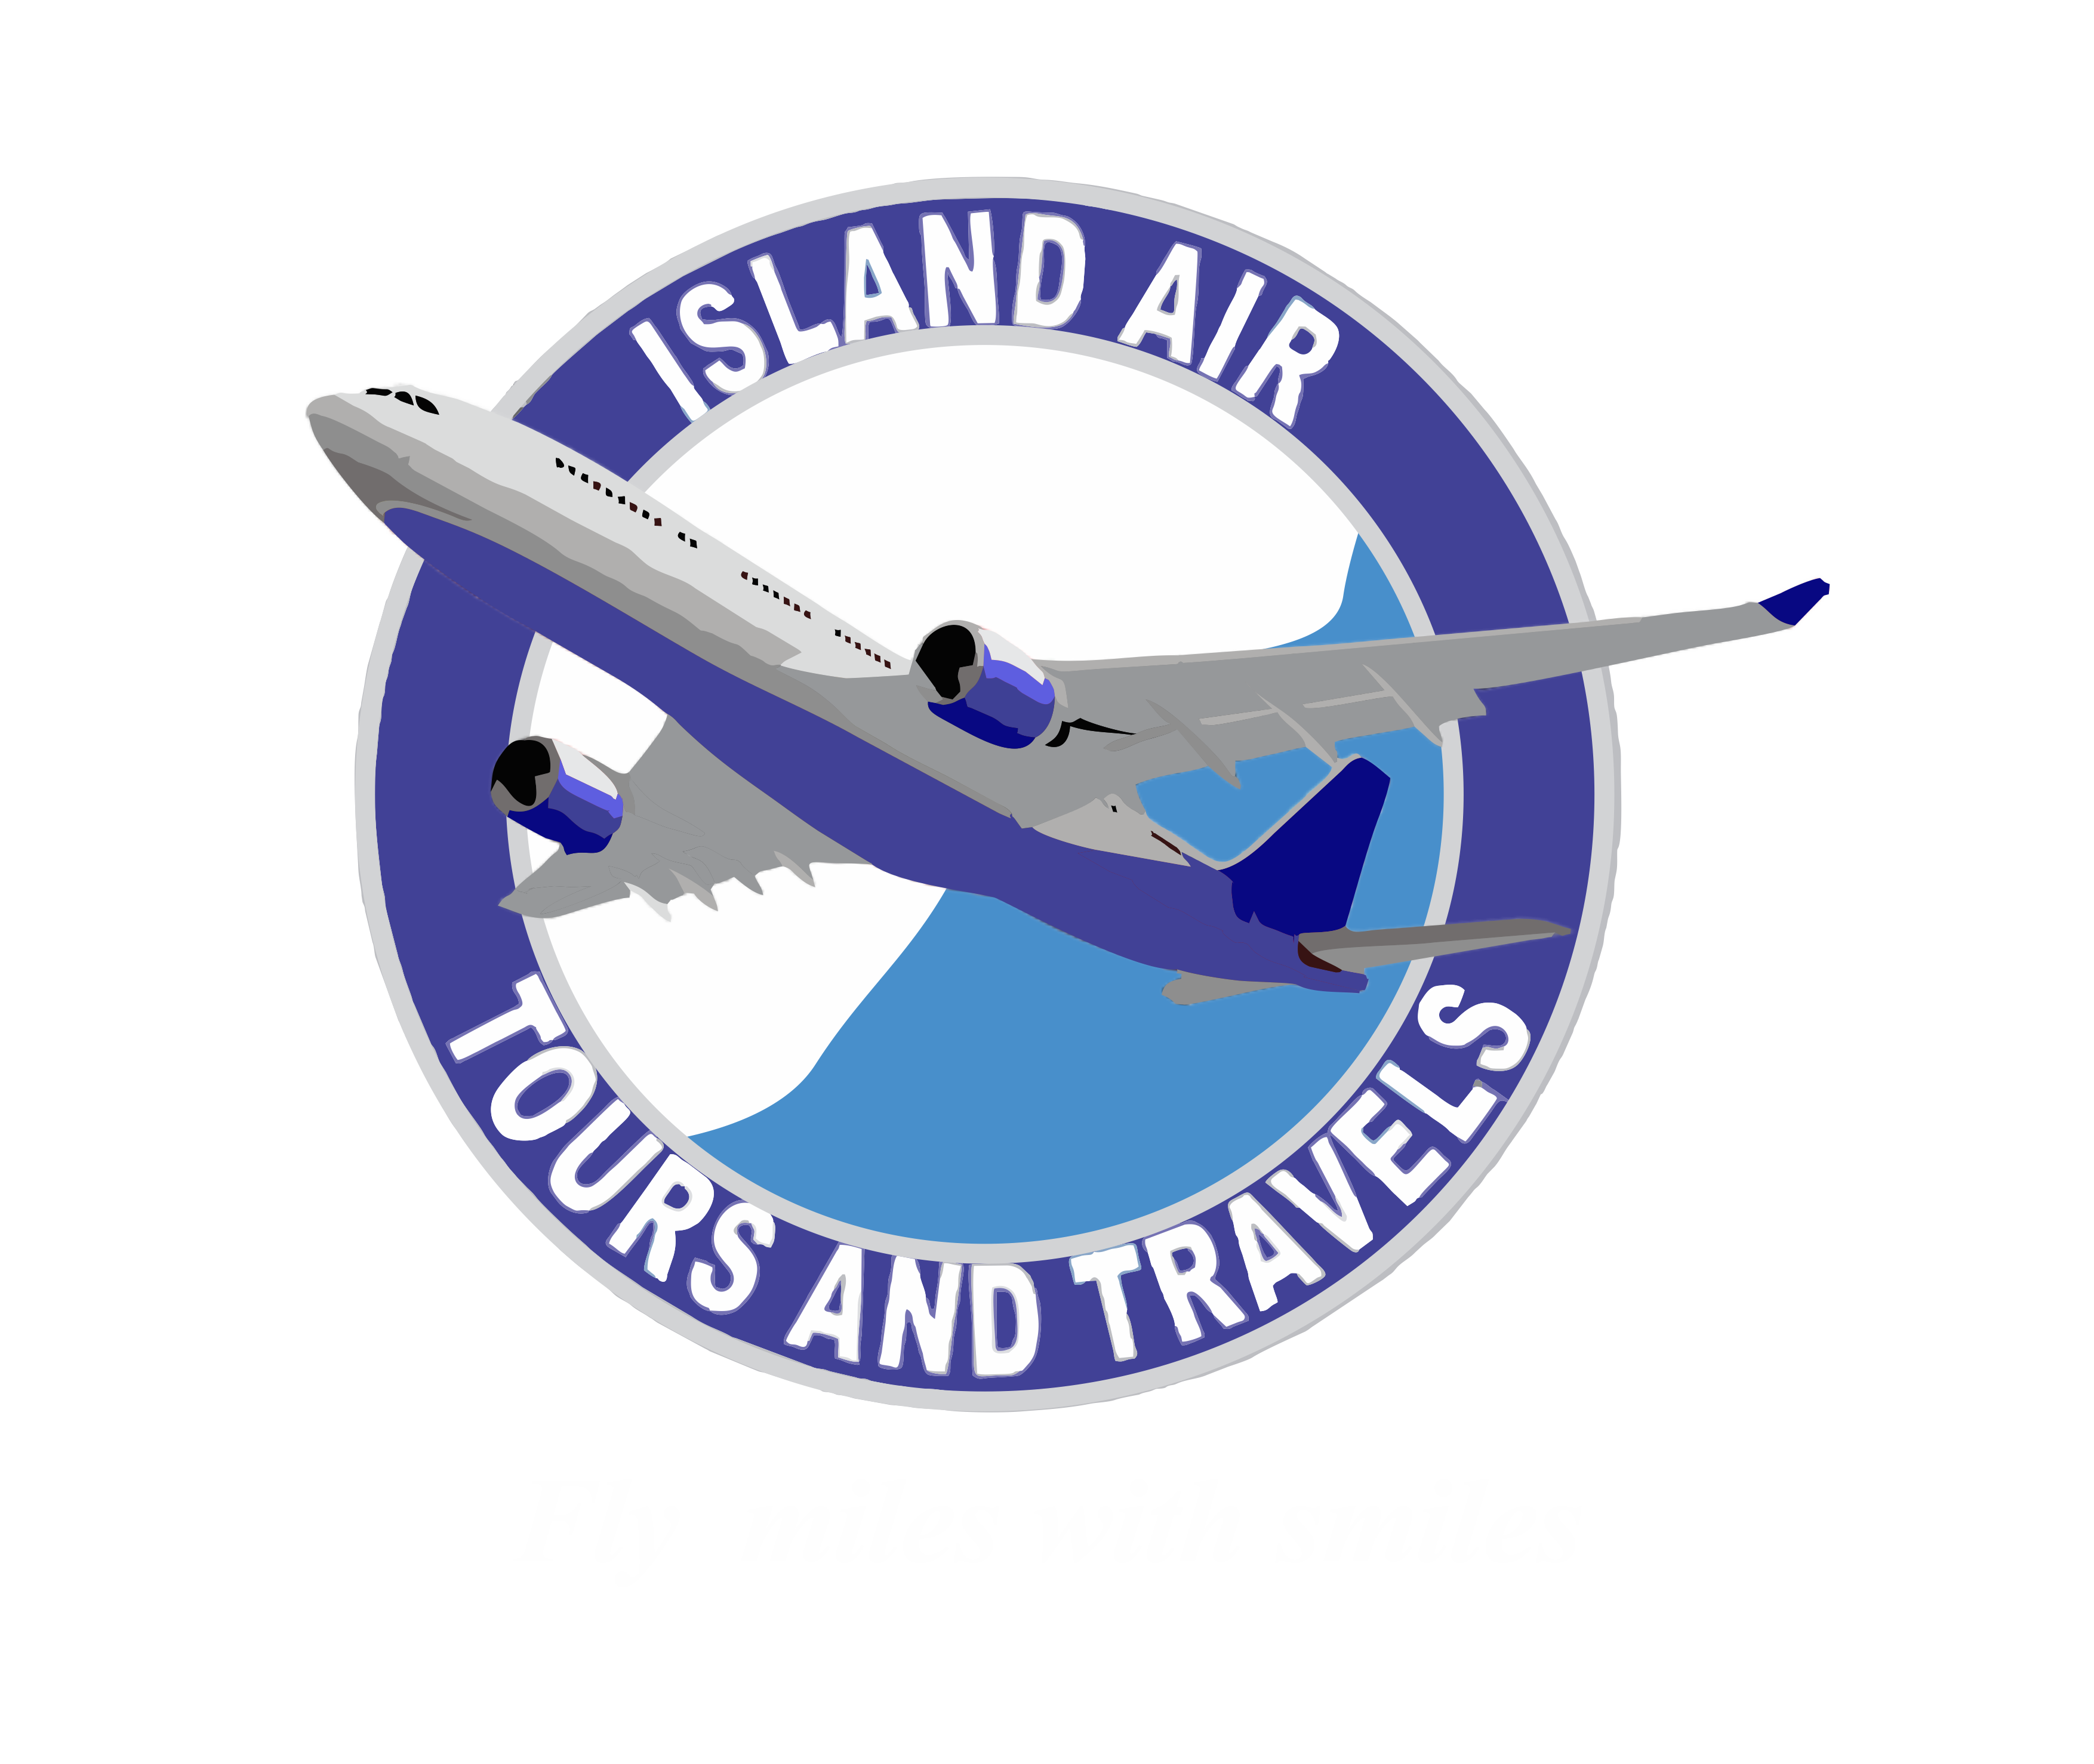  ISLAND AIR TOURS & TRAVELS